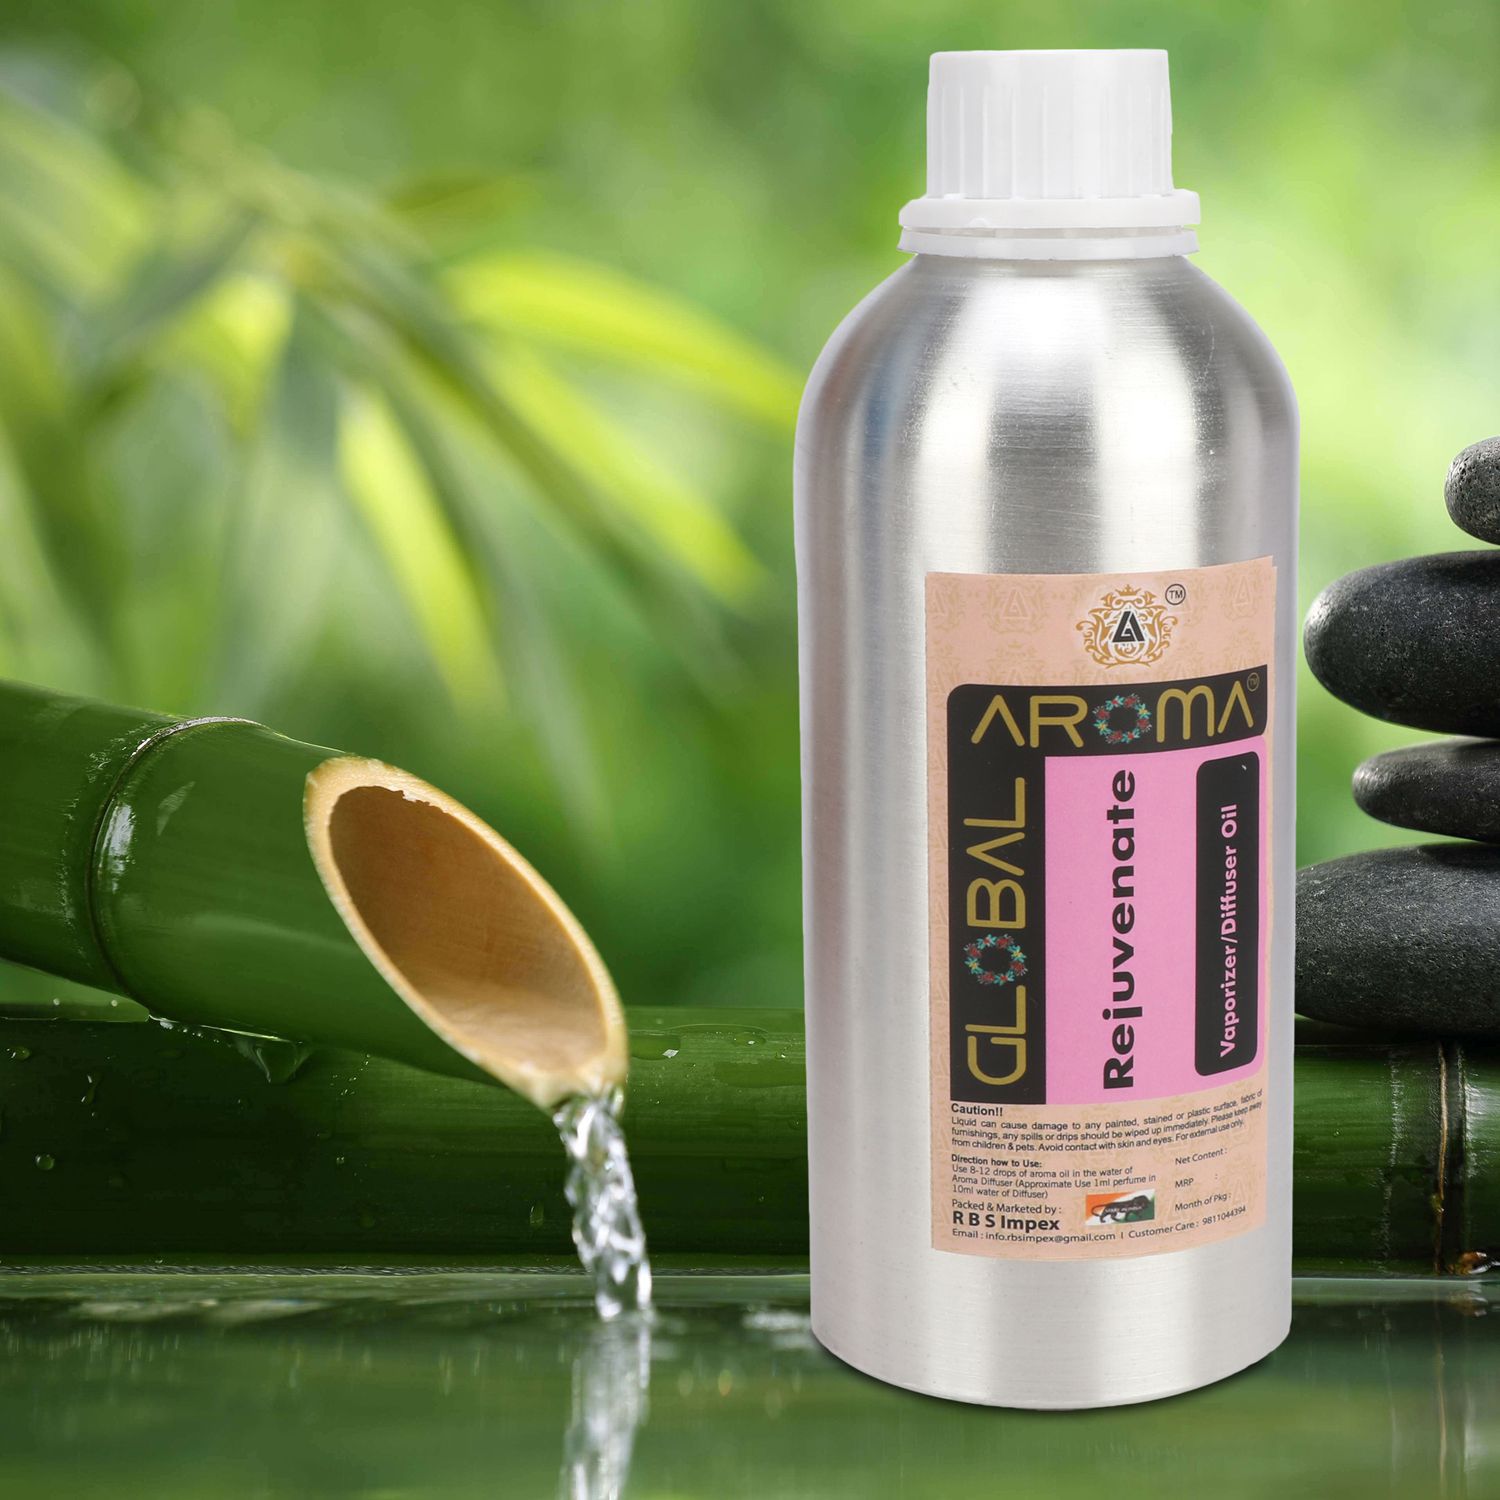 GLOBAL AROMA Aroma Oils - Pack of 1: Buy GLOBAL AROMA Aroma Oils - Pack